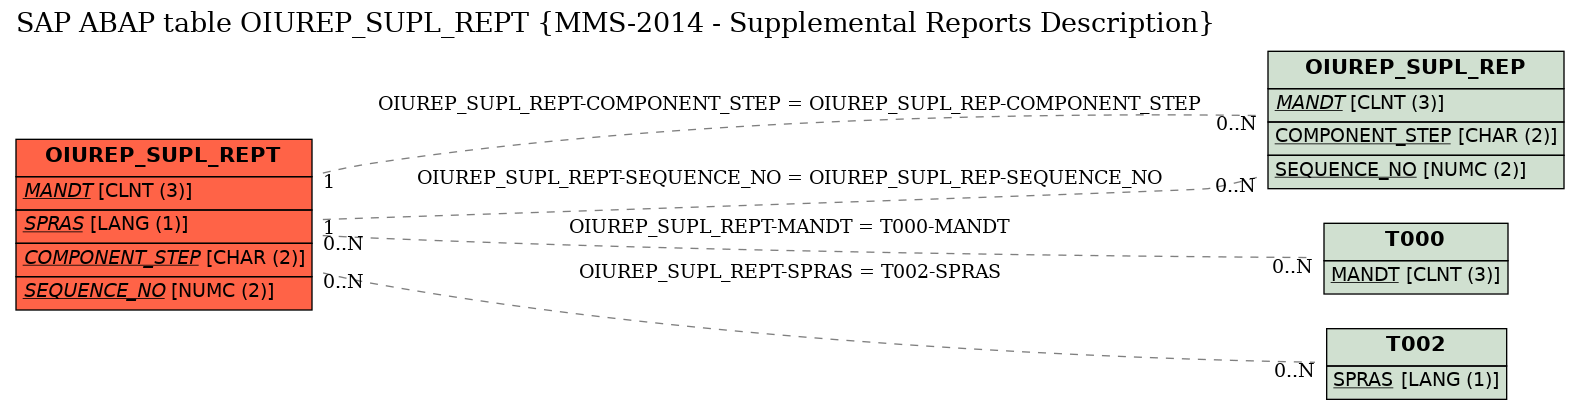 E-R Diagram for table OIUREP_SUPL_REPT (MMS-2014 - Supplemental Reports Description)